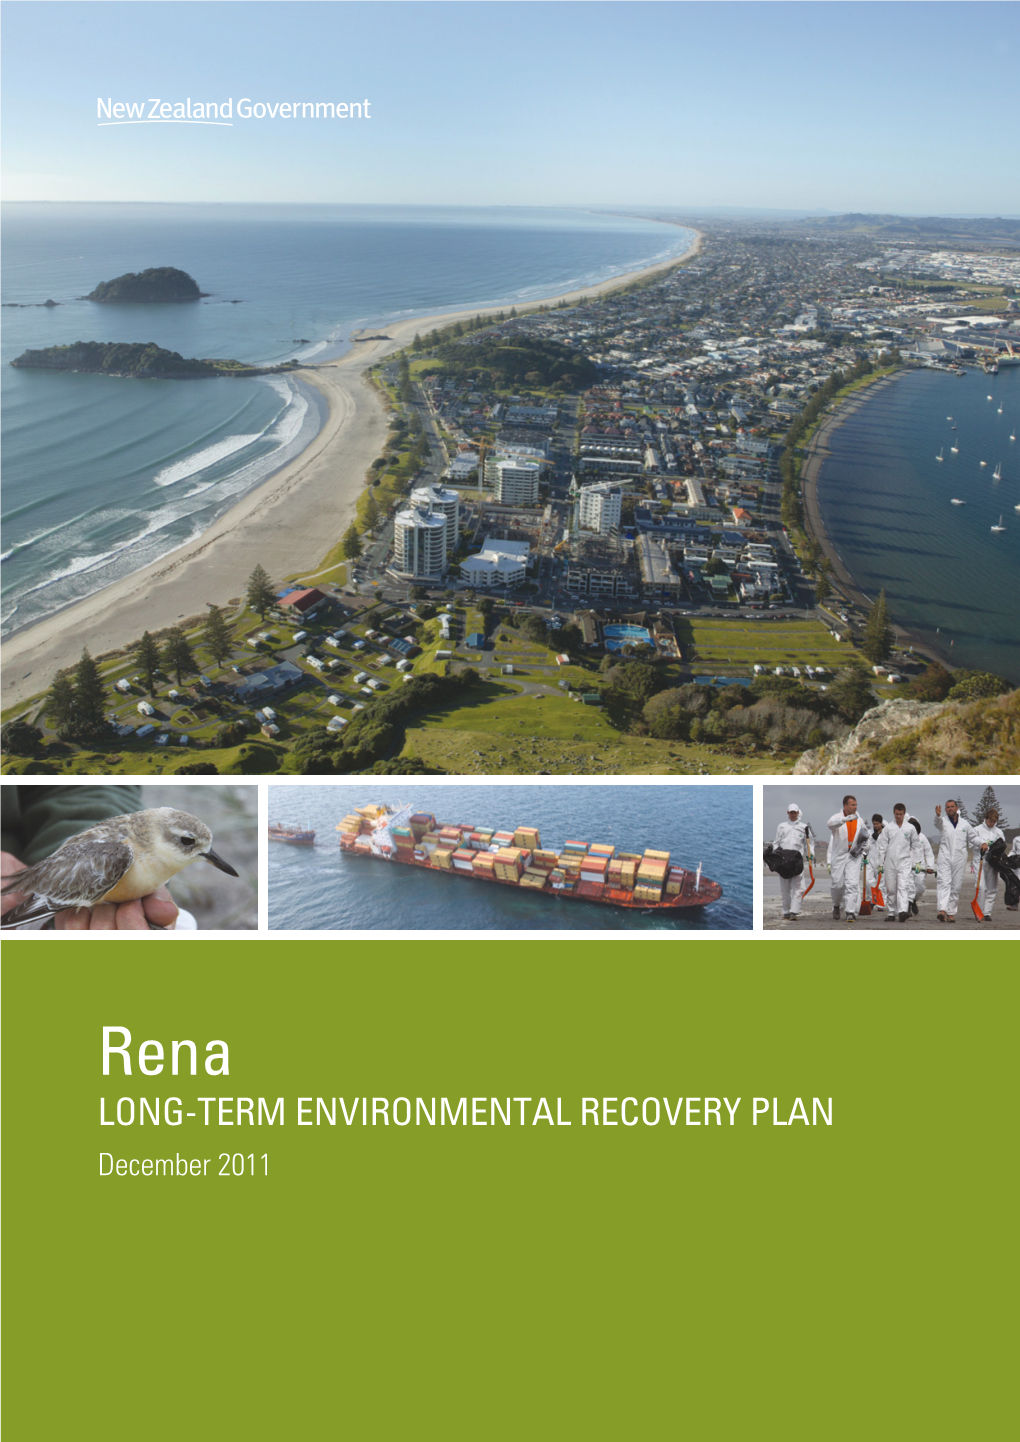 Rena: Long-Term Environmental Recovery Plan